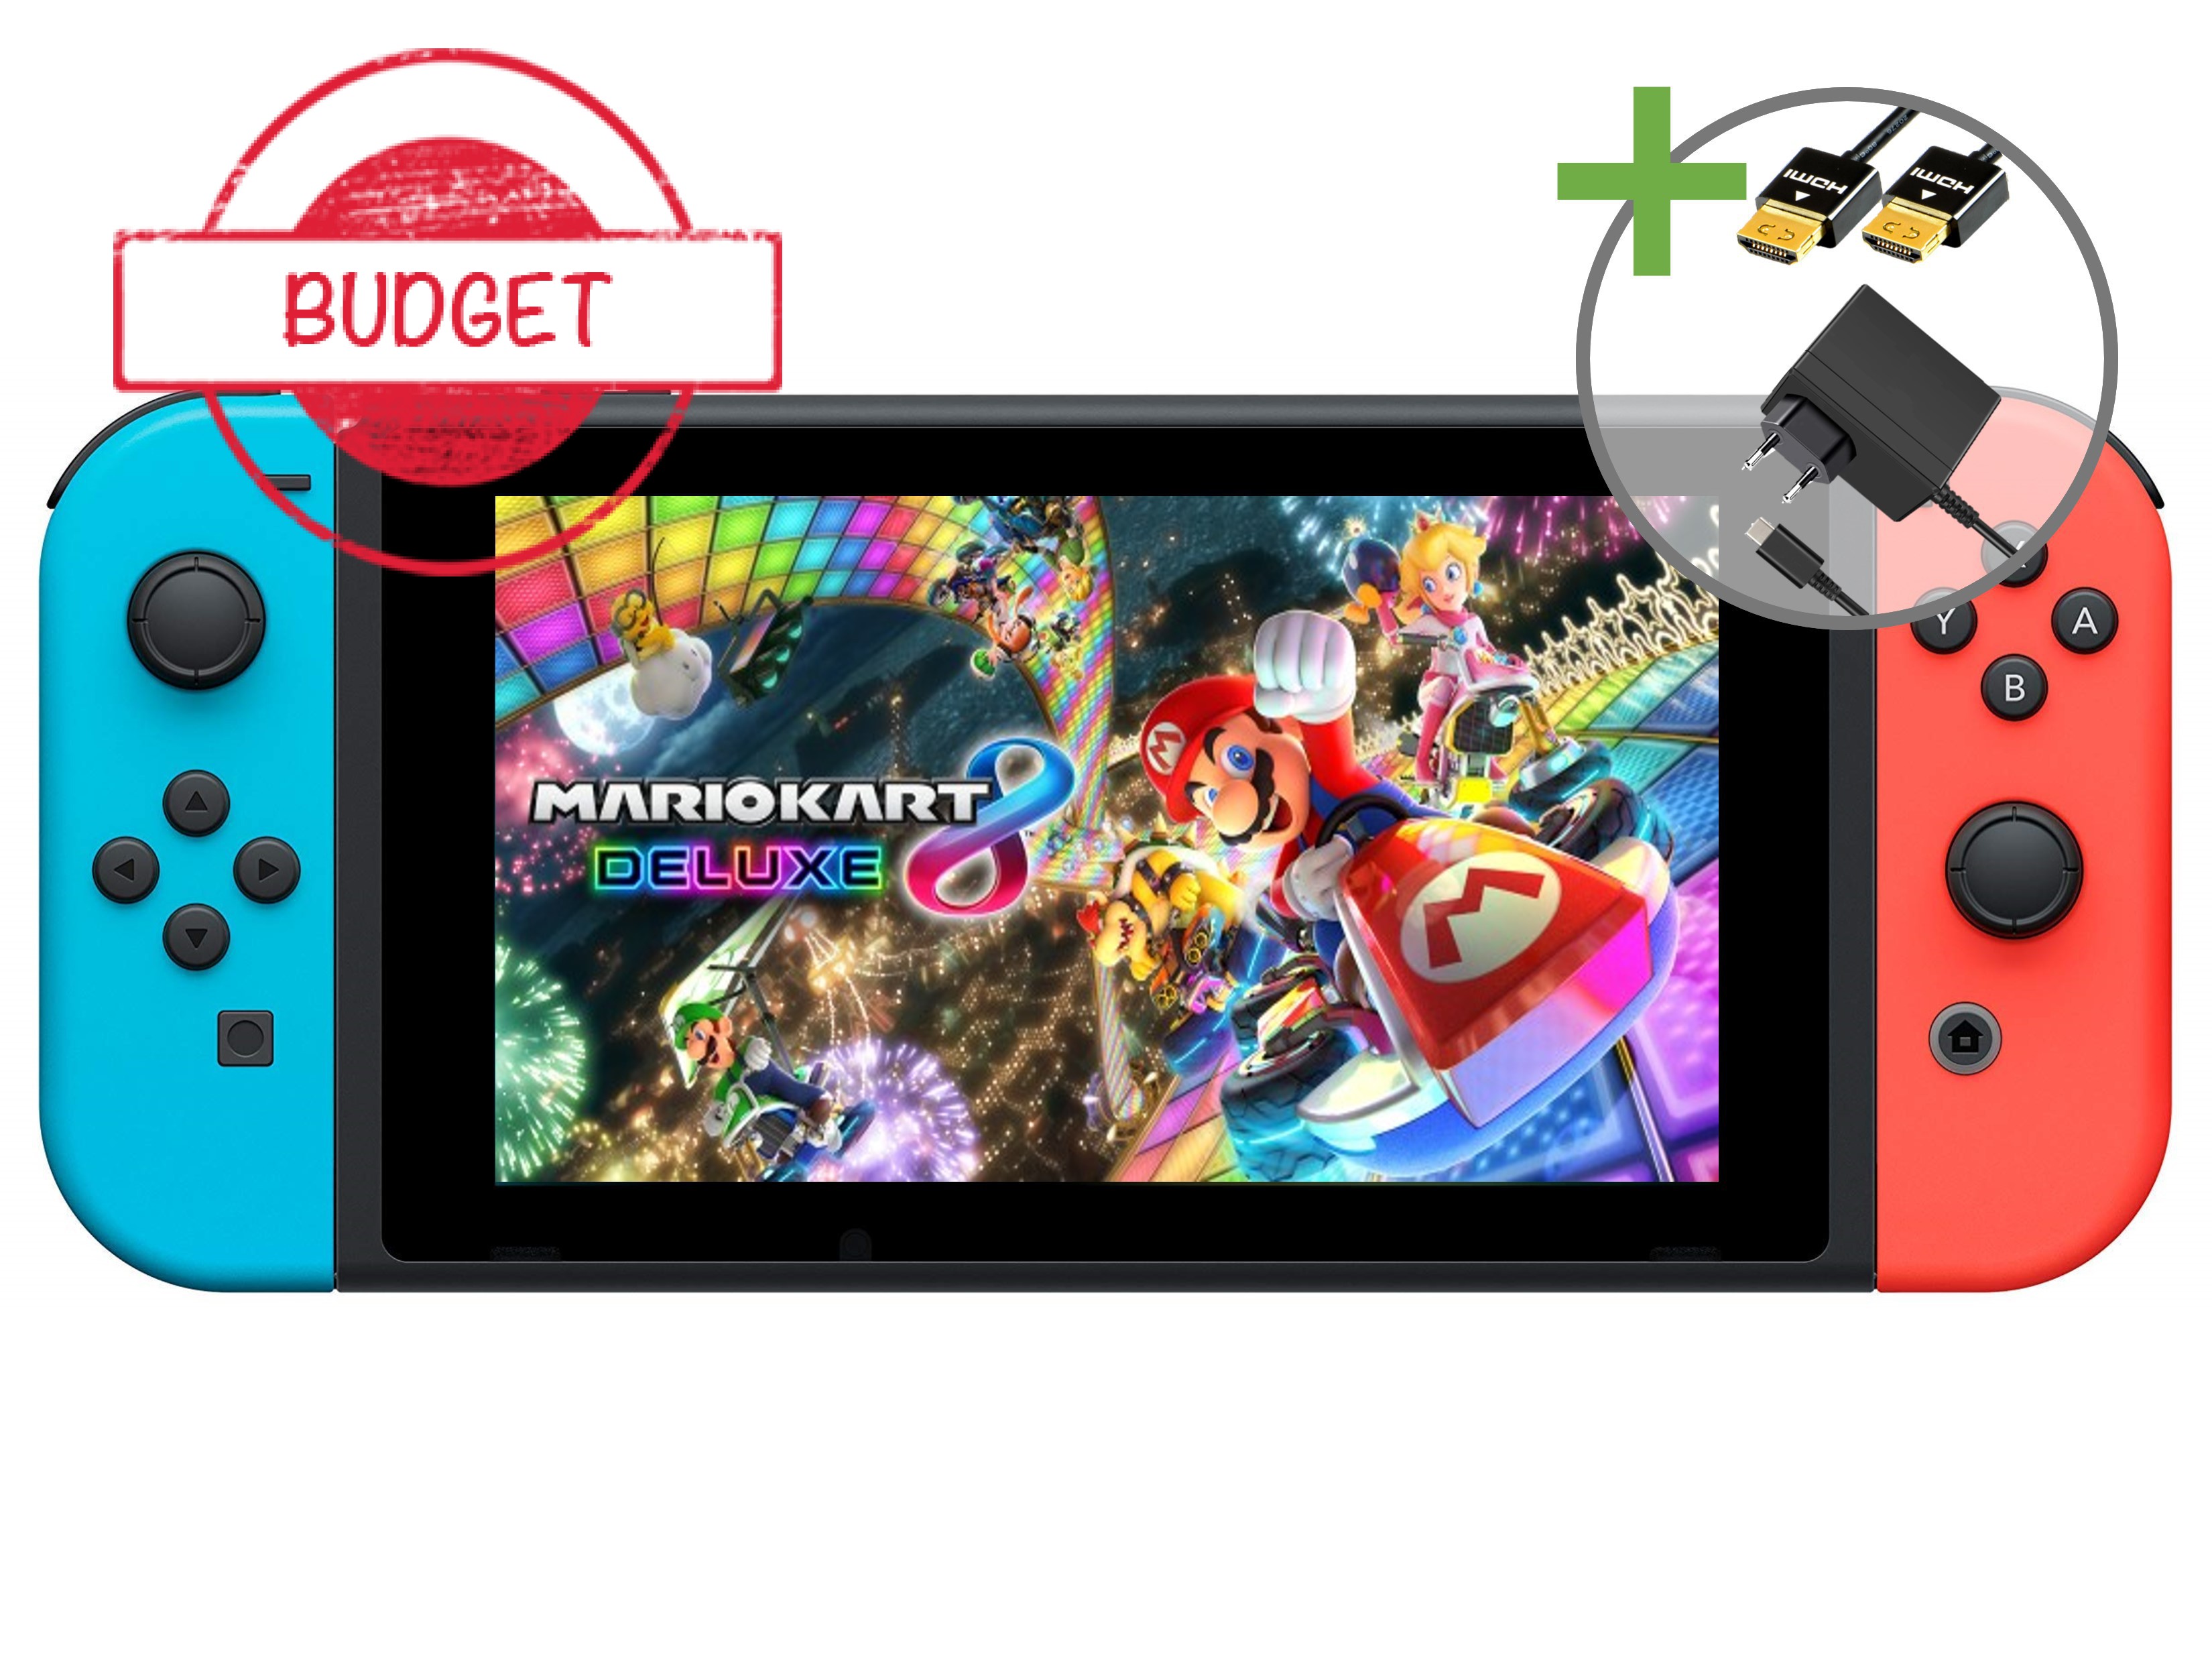 Nintendo Switch Starter Pack - Mario Kart 8 Deluxe Rood/Blauw Edition - Budget - Nintendo Switch Hardware - 2